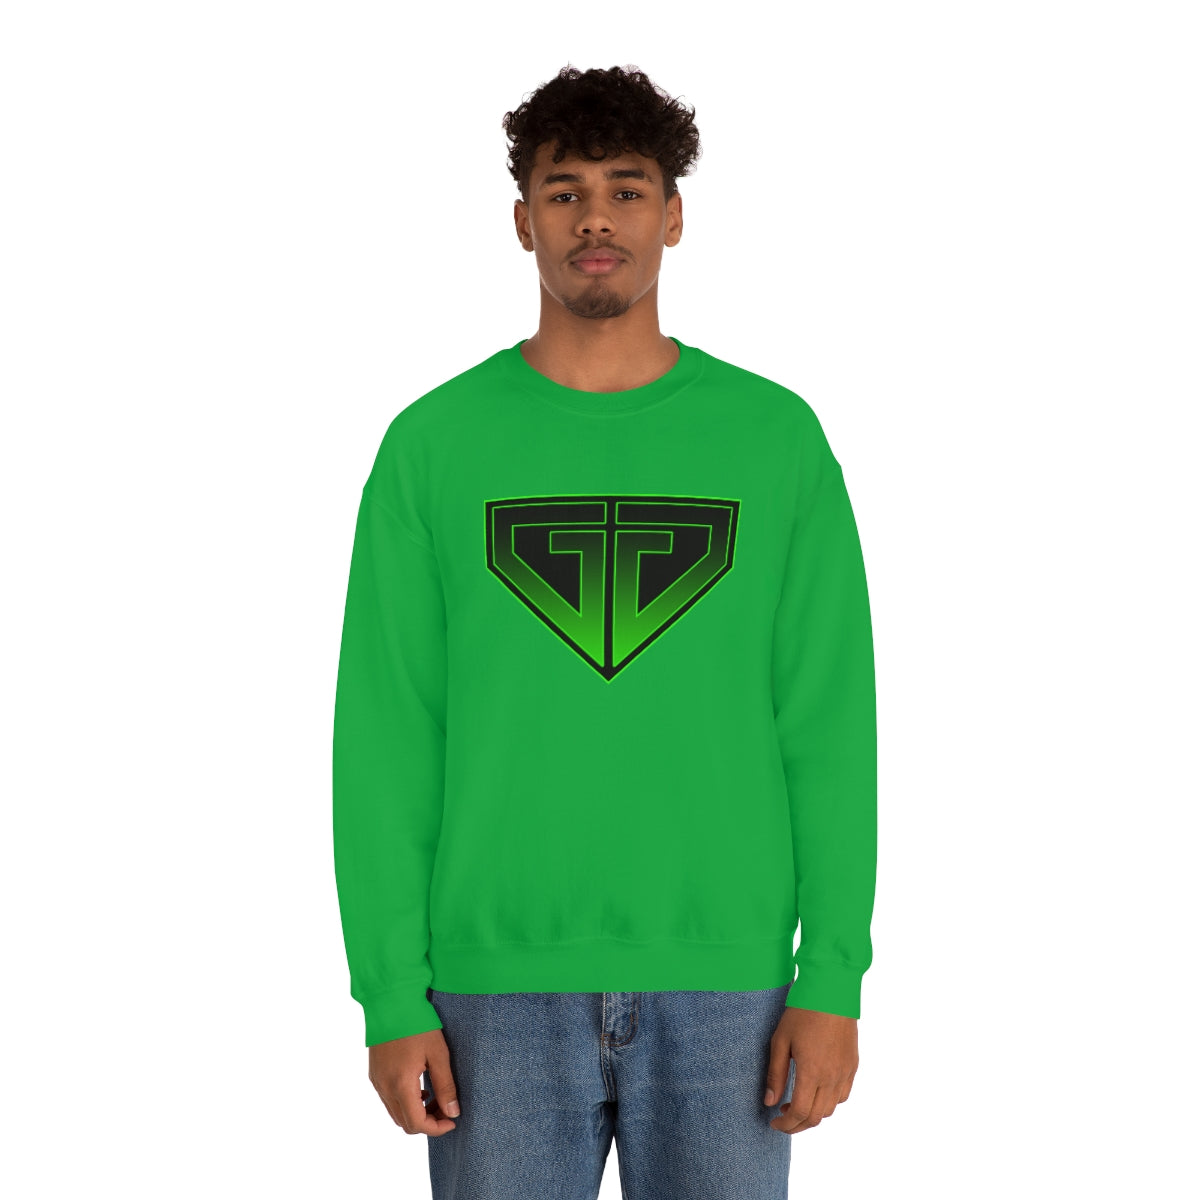 JJ Green Giant Unisex Sweatshirt